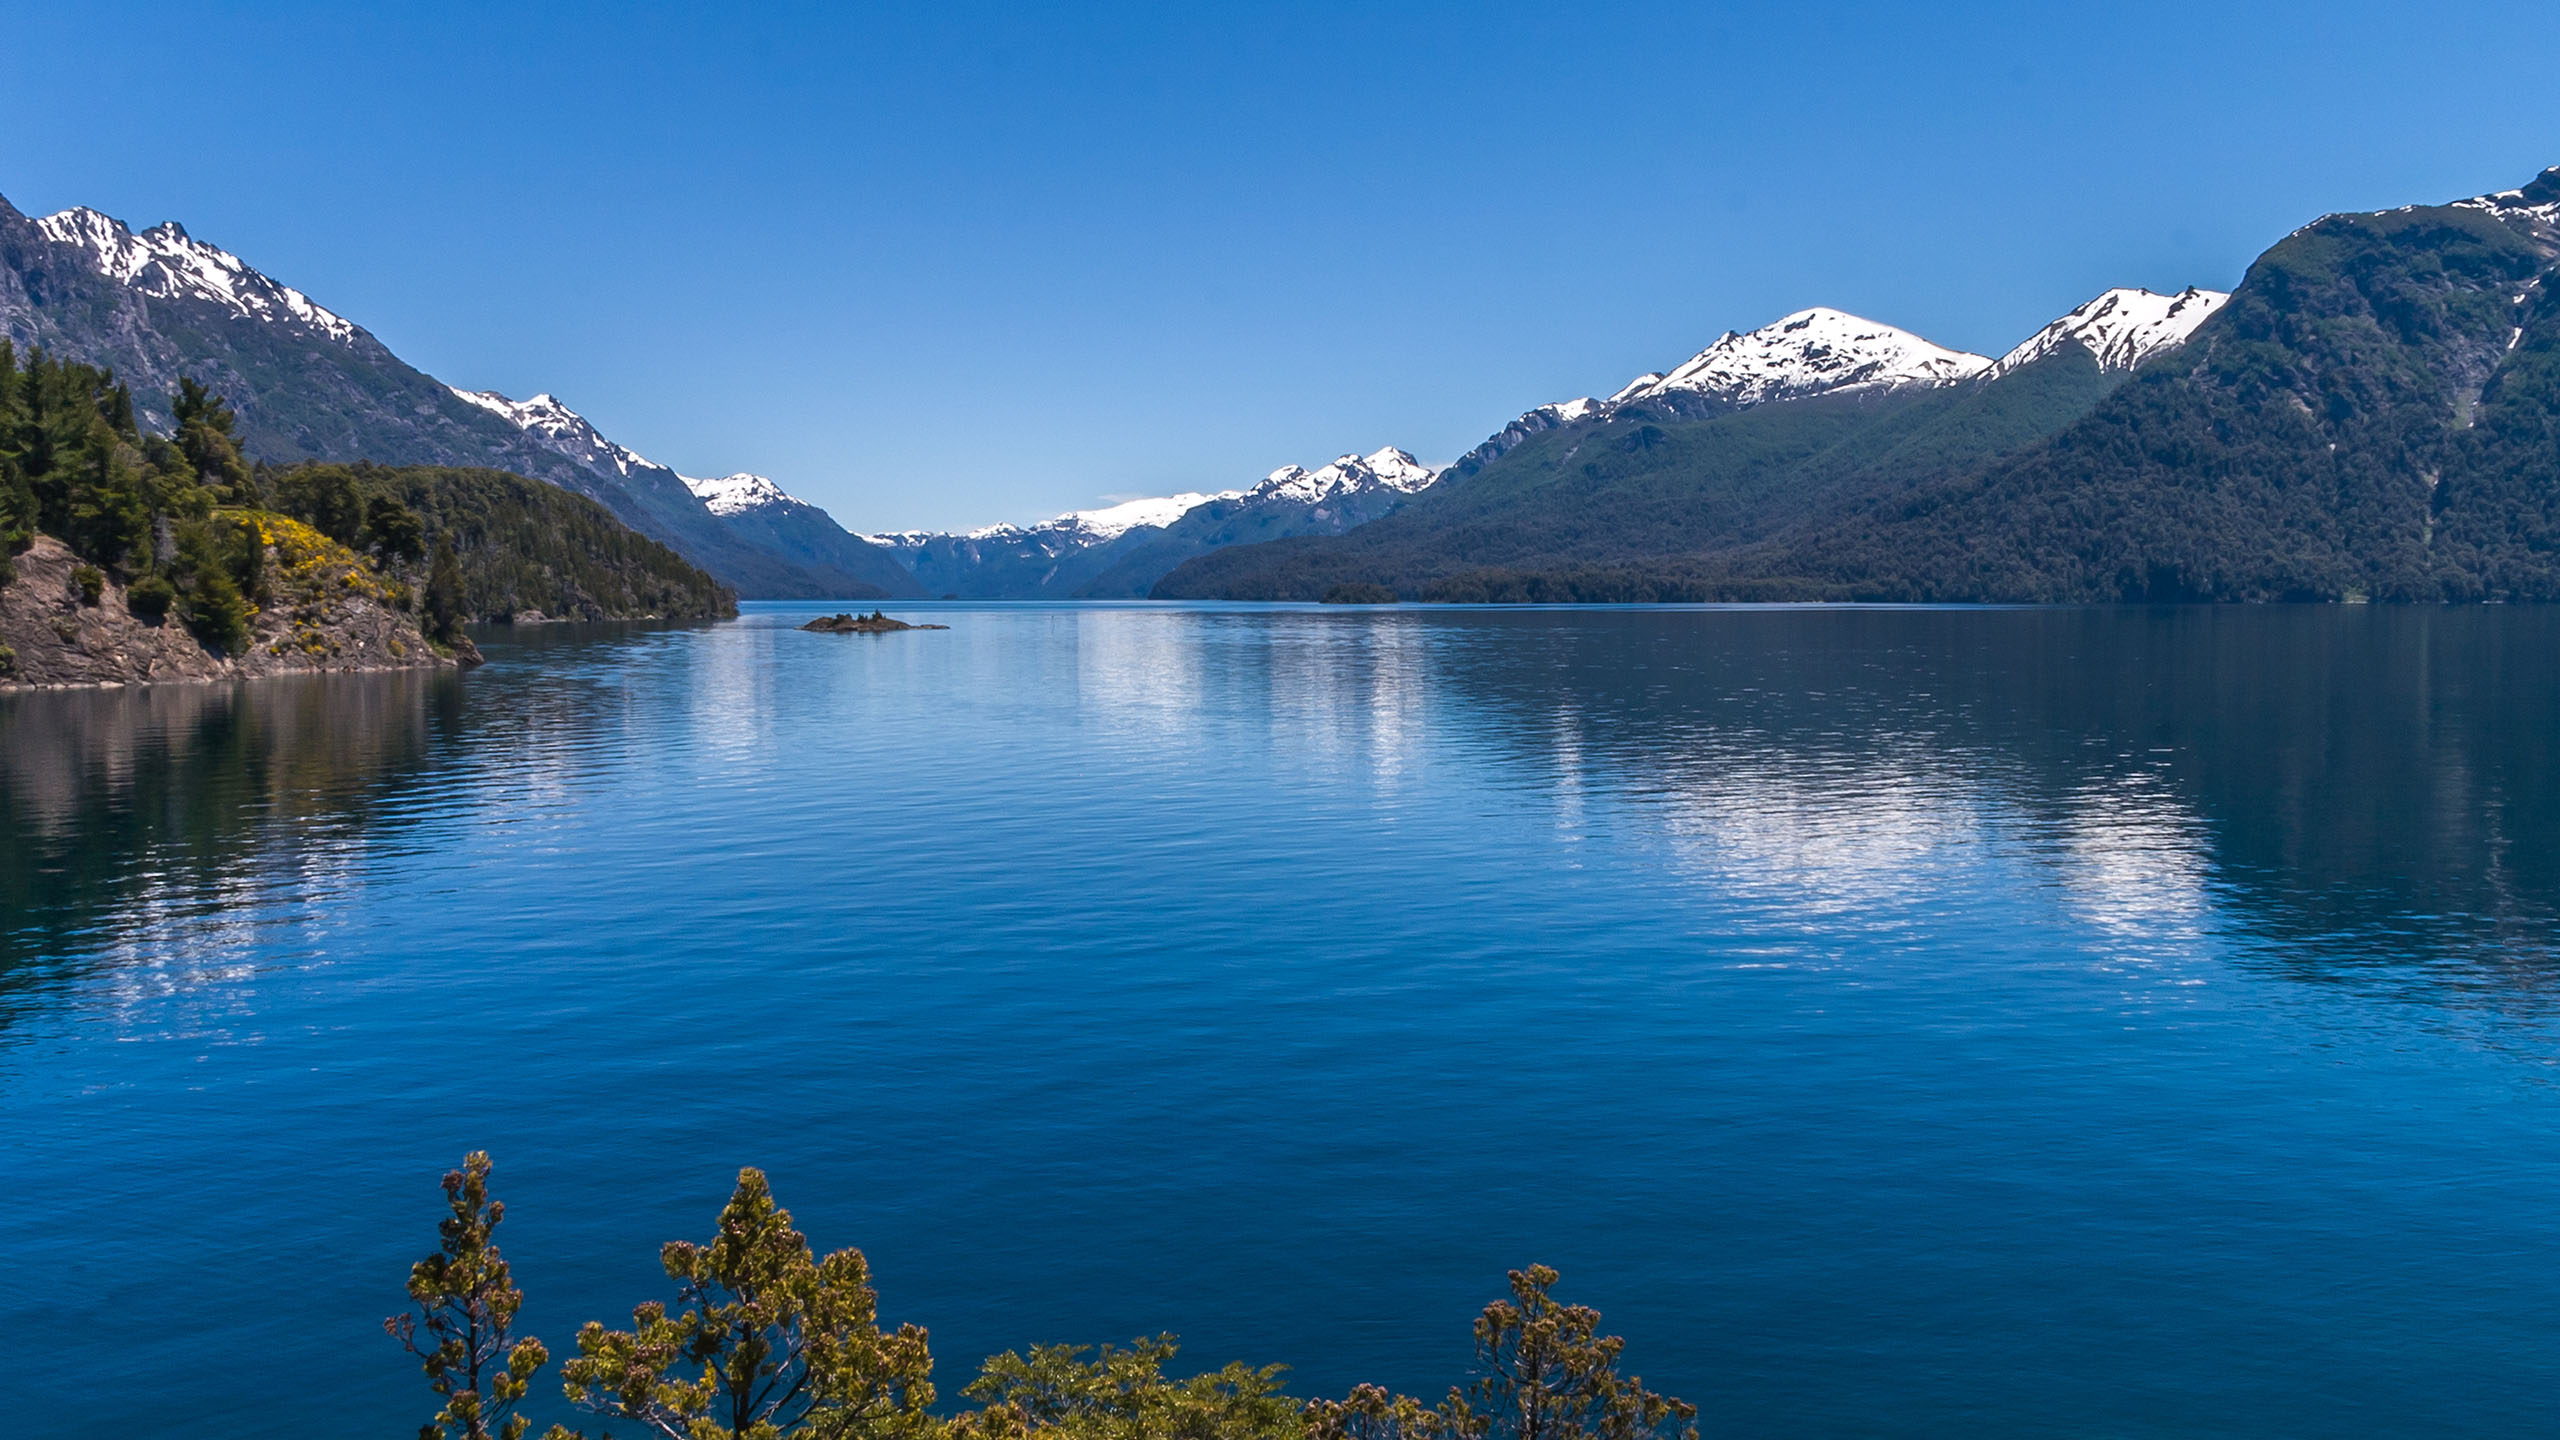 Argentina Lake District holidays 2022/2023 | Abercrombie & Kent